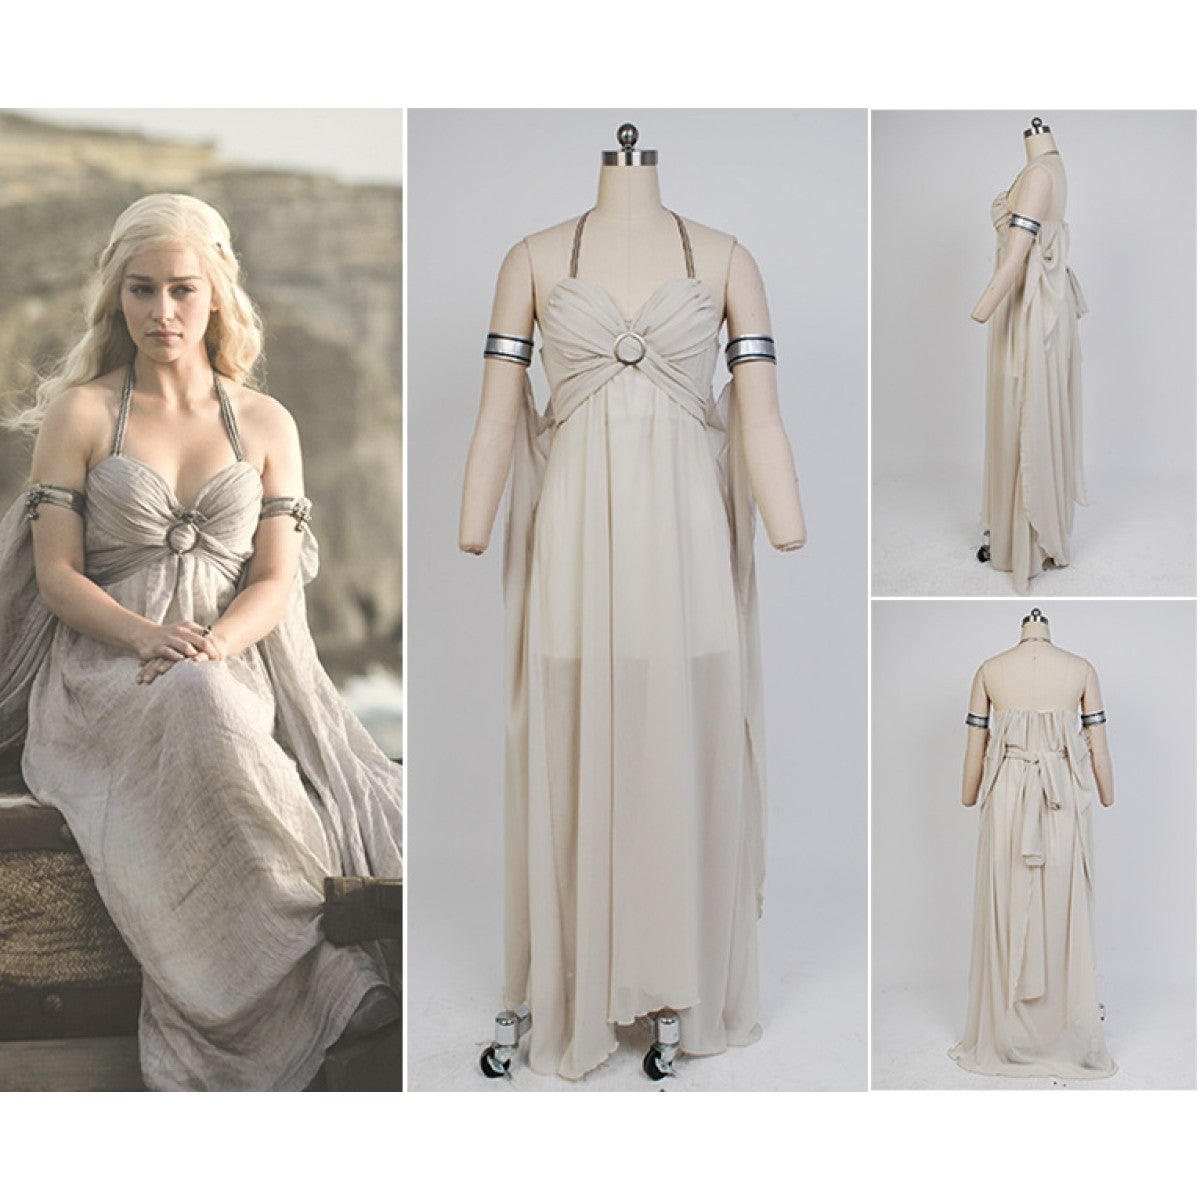 Daenerys Targaryen Mother of Dragons Costume from Game of Thrones